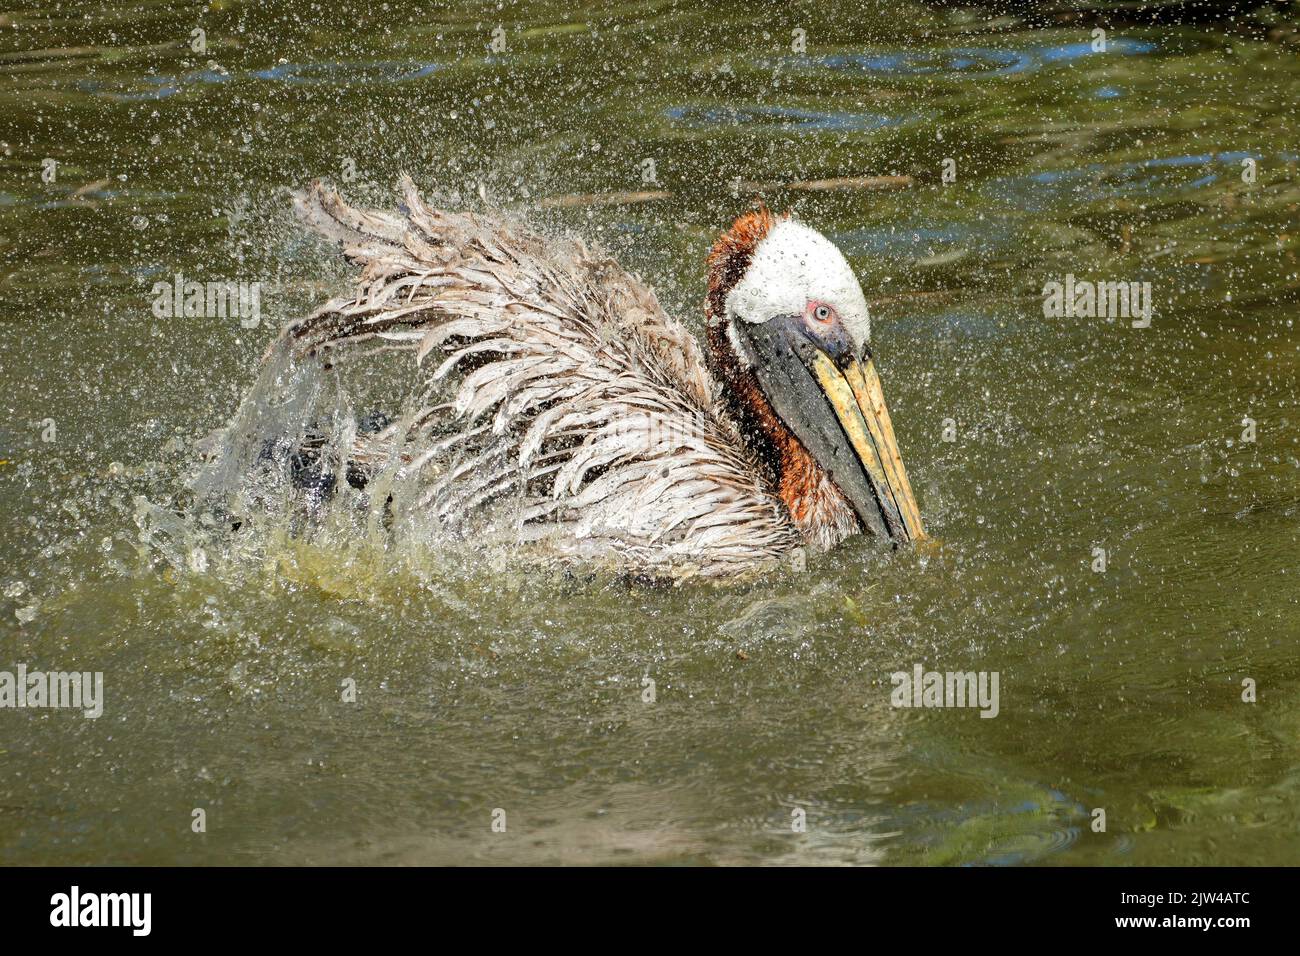 A brown pelican (Pelecanus occidentalis) splashing in water, America Stock Photo